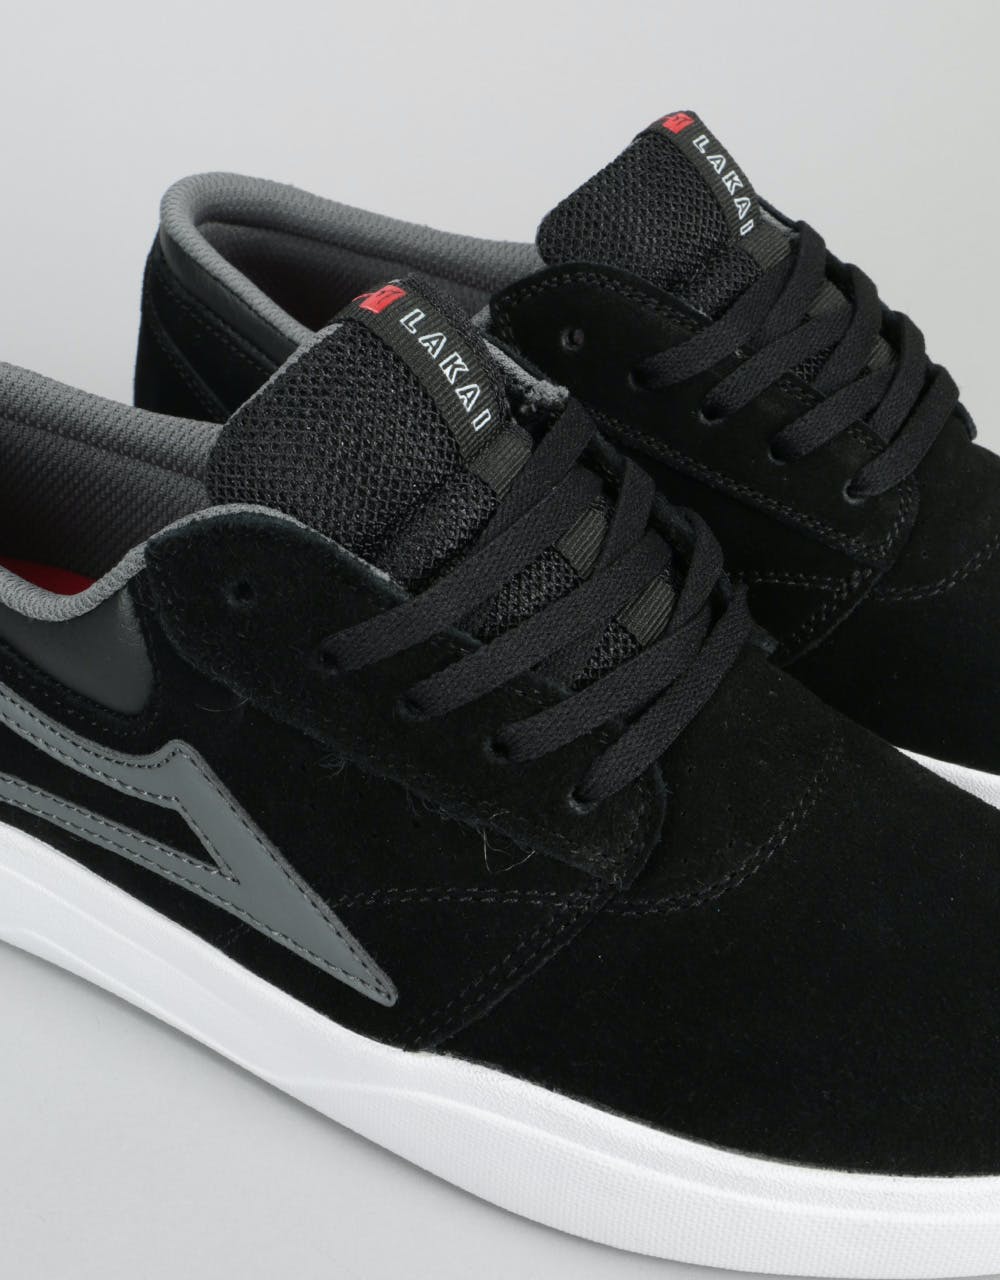 Lakai Griffin XLK Skate Shoes - Black/Grey Suede